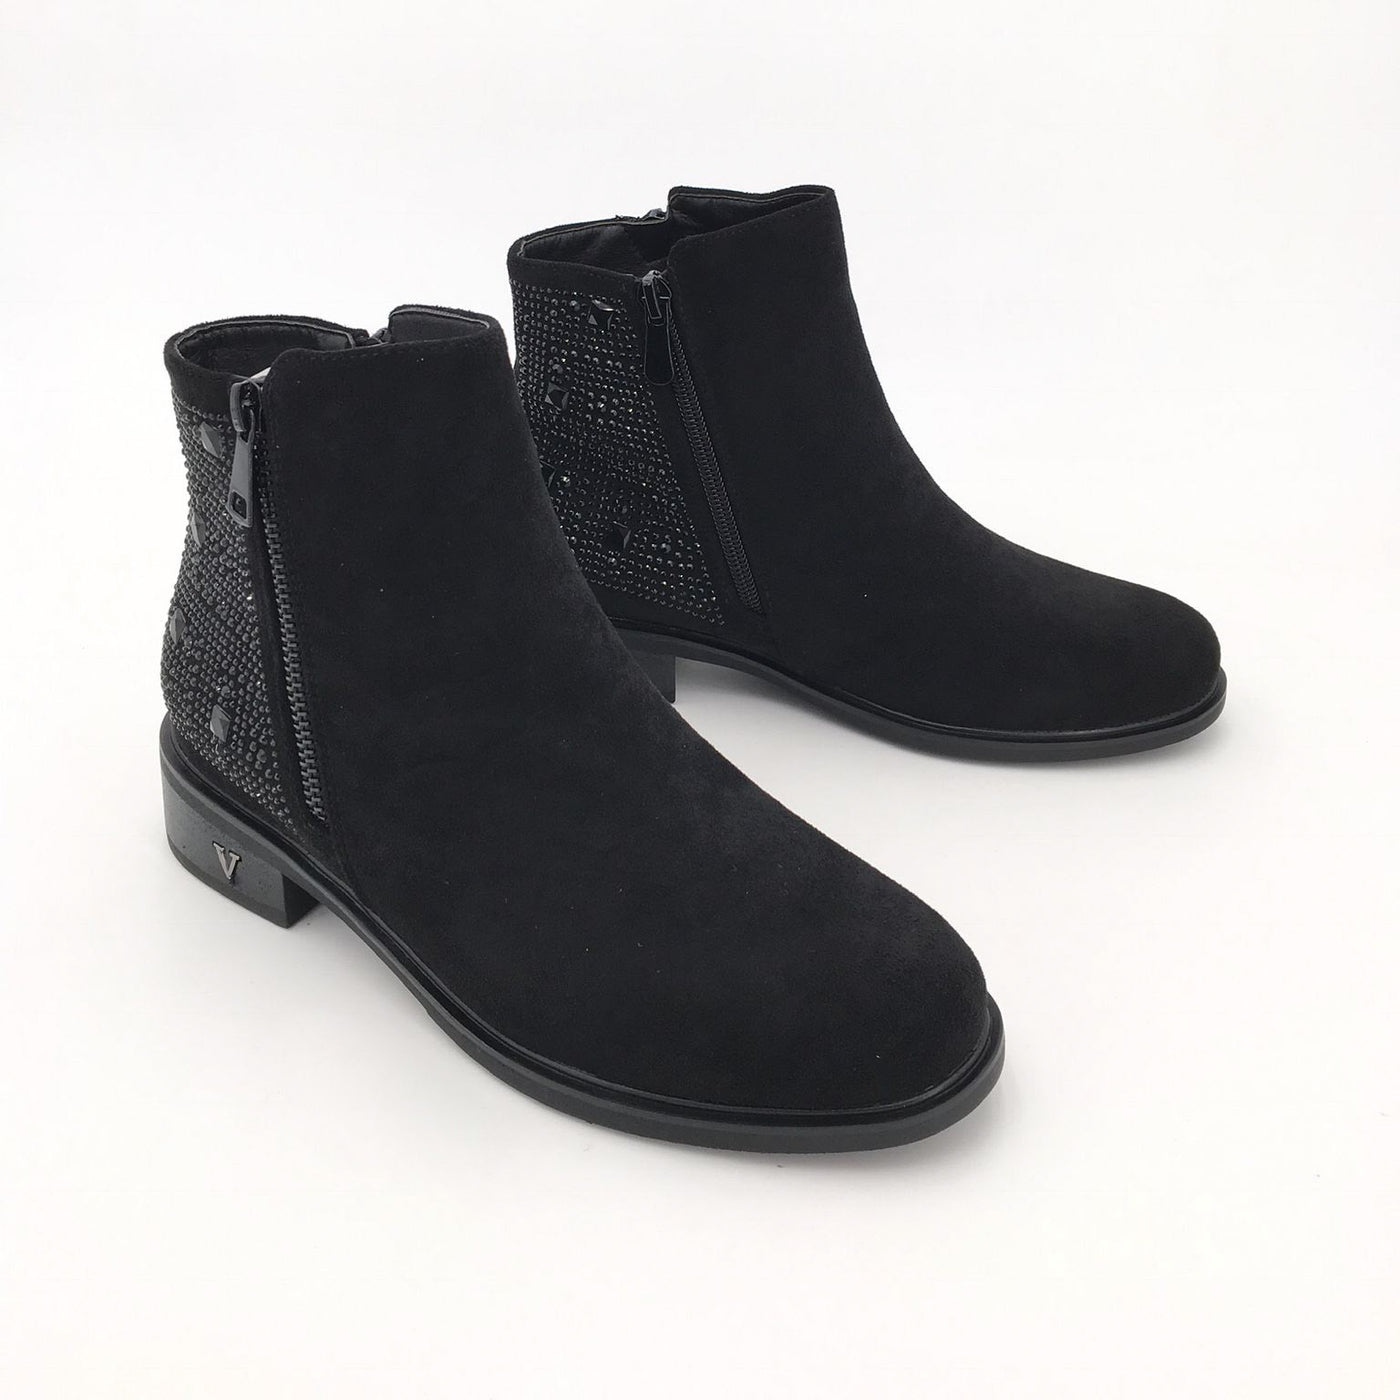 Vieve Black Boots